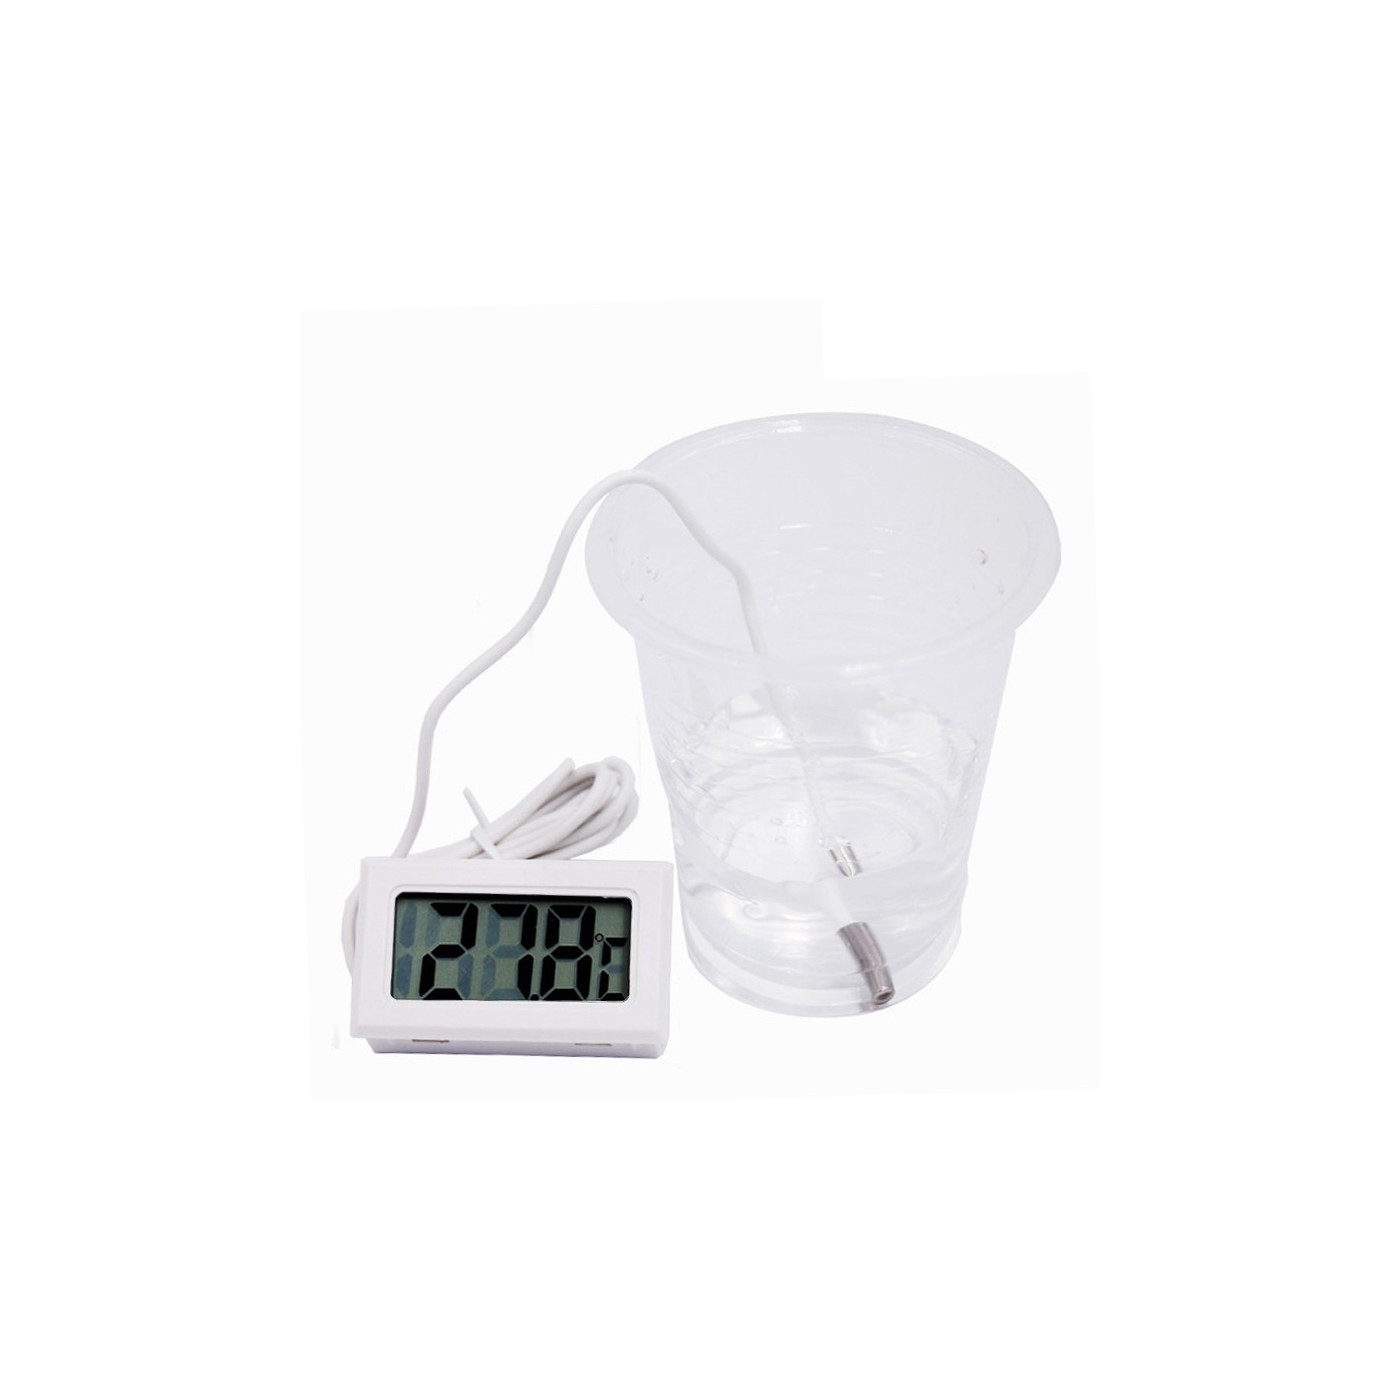 Biały termometr LCD z sondą (do akwarium itp.)